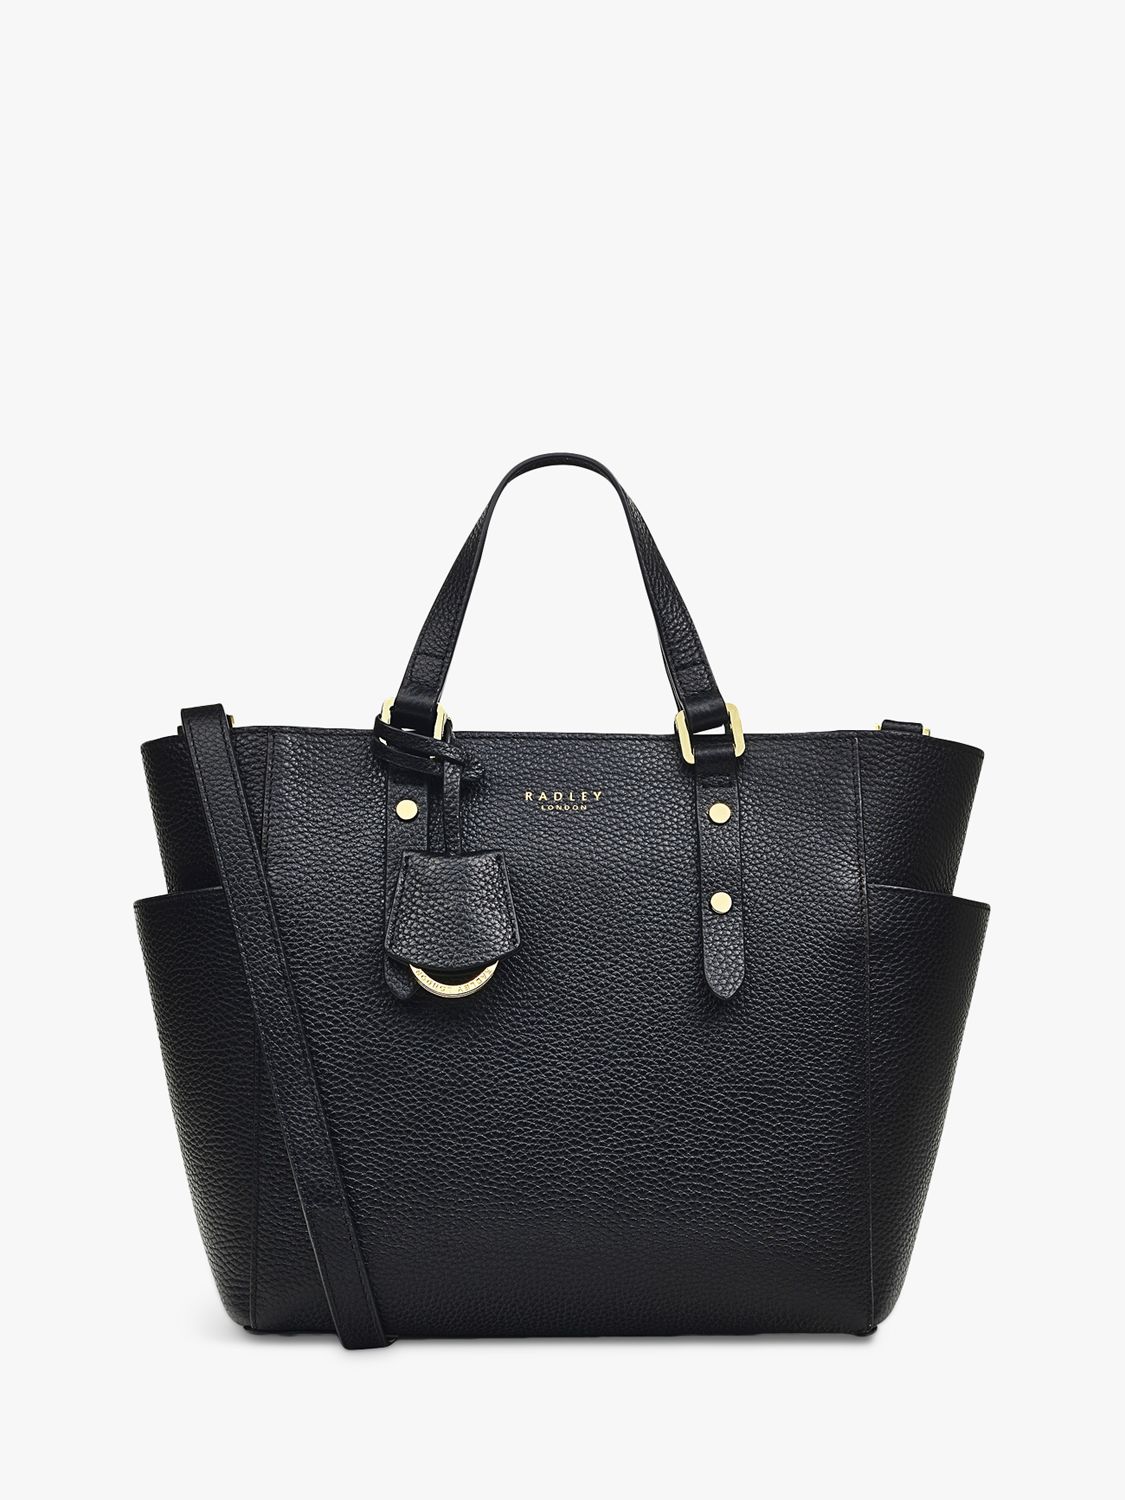 Radley Shoulder Bag Black Medium Handbag Leather Top Zip Satchel